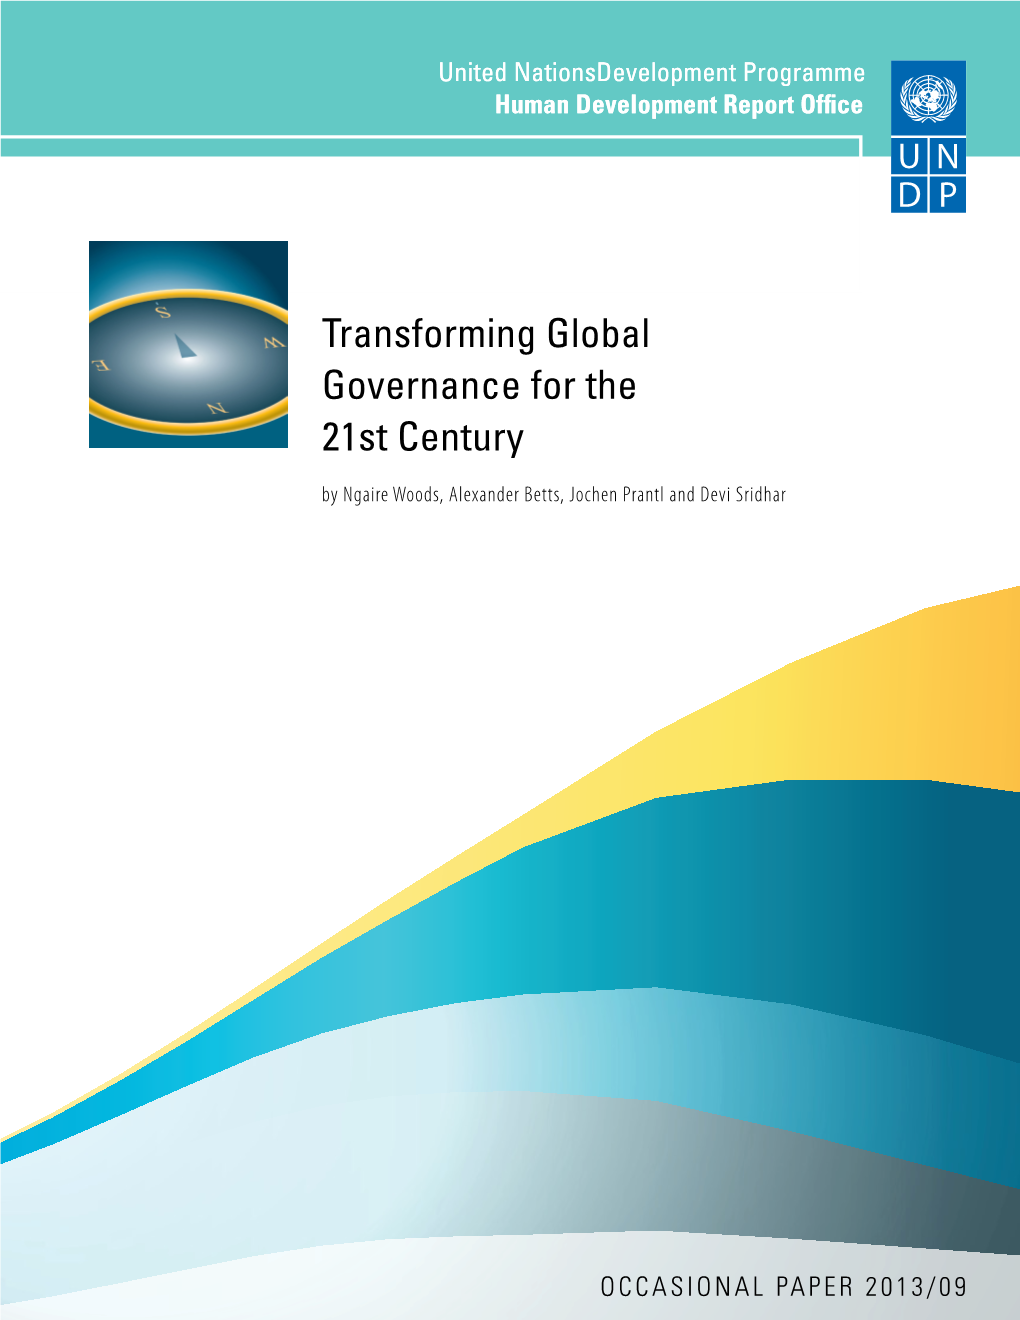 Transforming Global Governance for the 21St Century by Ngaire Woods, Alexander Betts, Jochen Prantl and Devi Sridhar